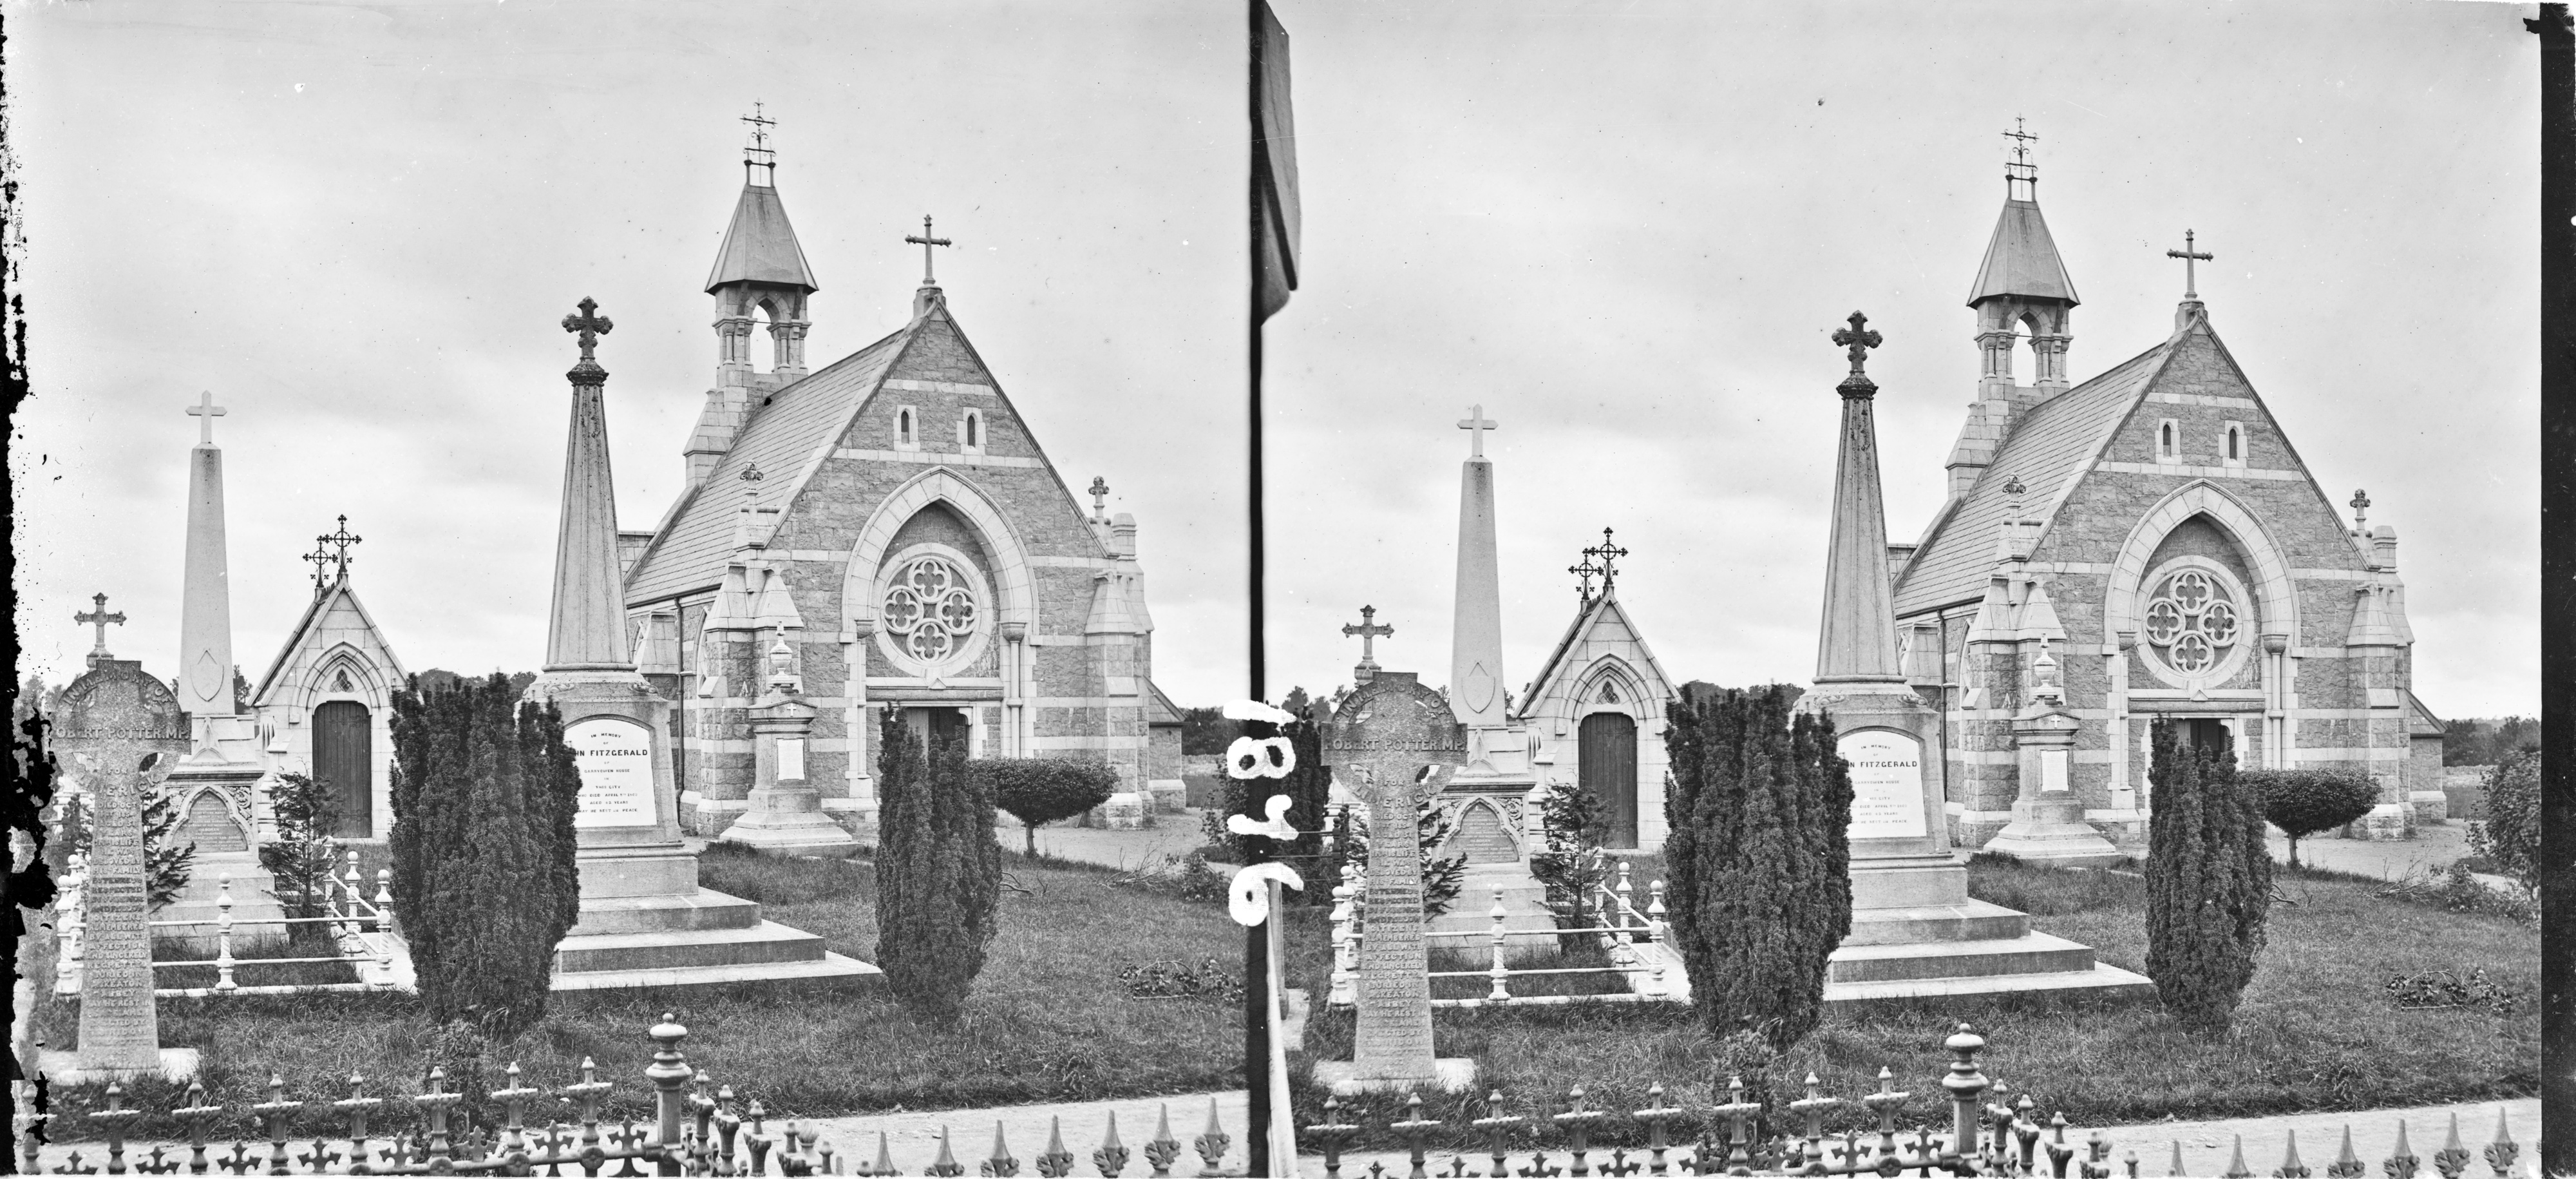 Graveyards, memorials of Robt. Potter MP for Limerick, Fitzgerald of Garryowen, etc. church in background, Limerick City, Co. Limerick